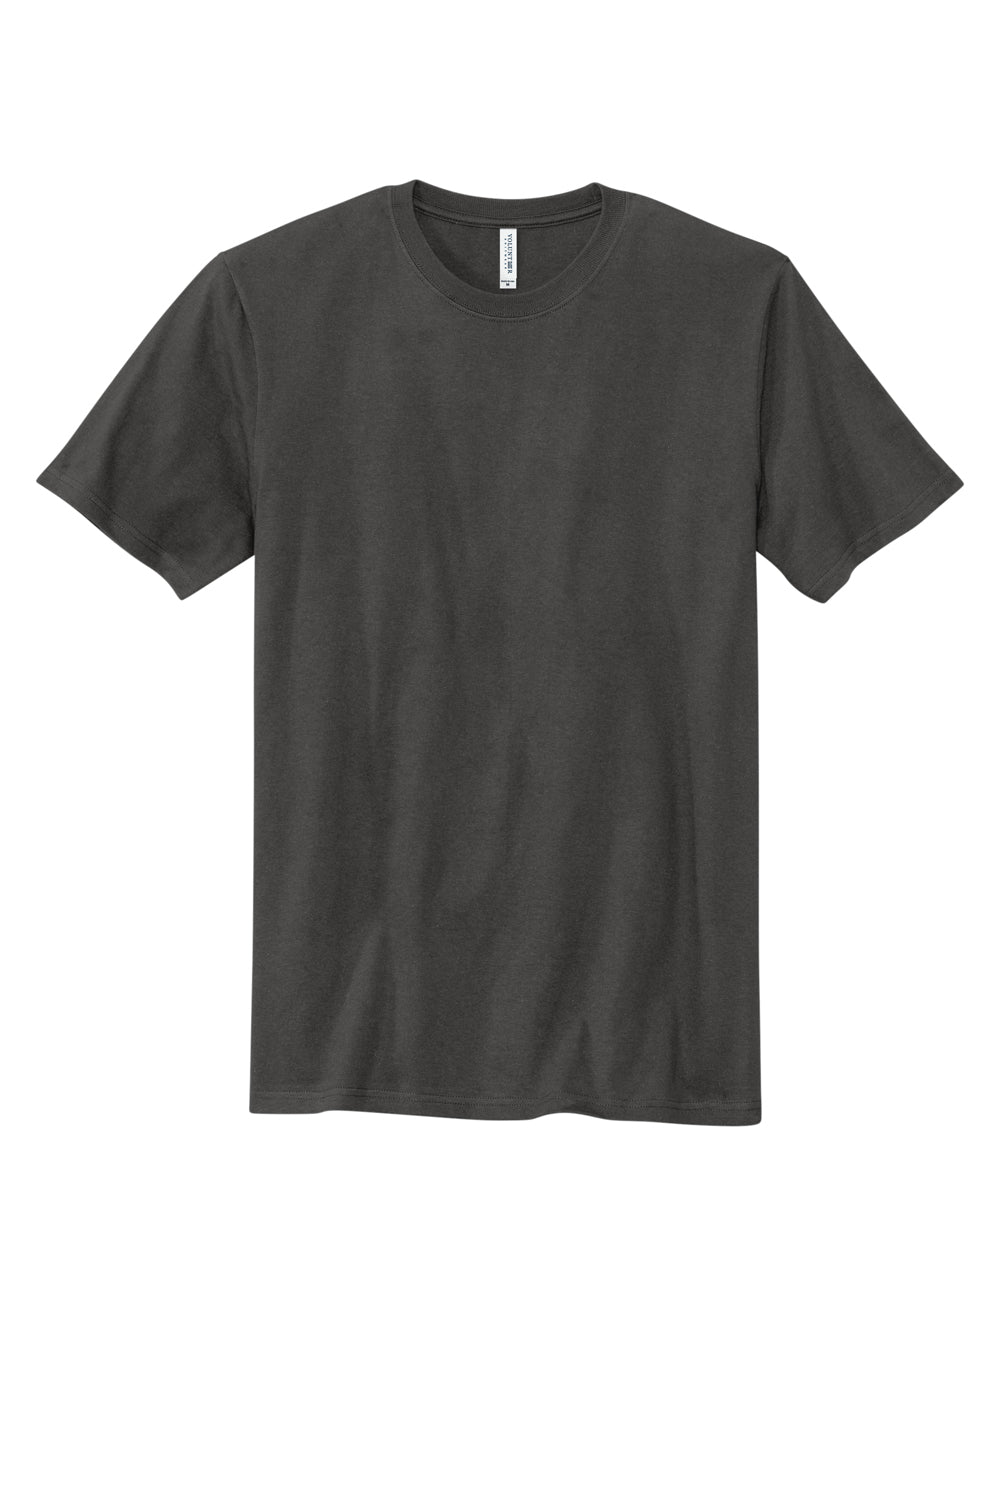 Volunteer Knitwear VL60 Chore Short Sleeve Crewneck T-Shirt Steel Grey Flat Front